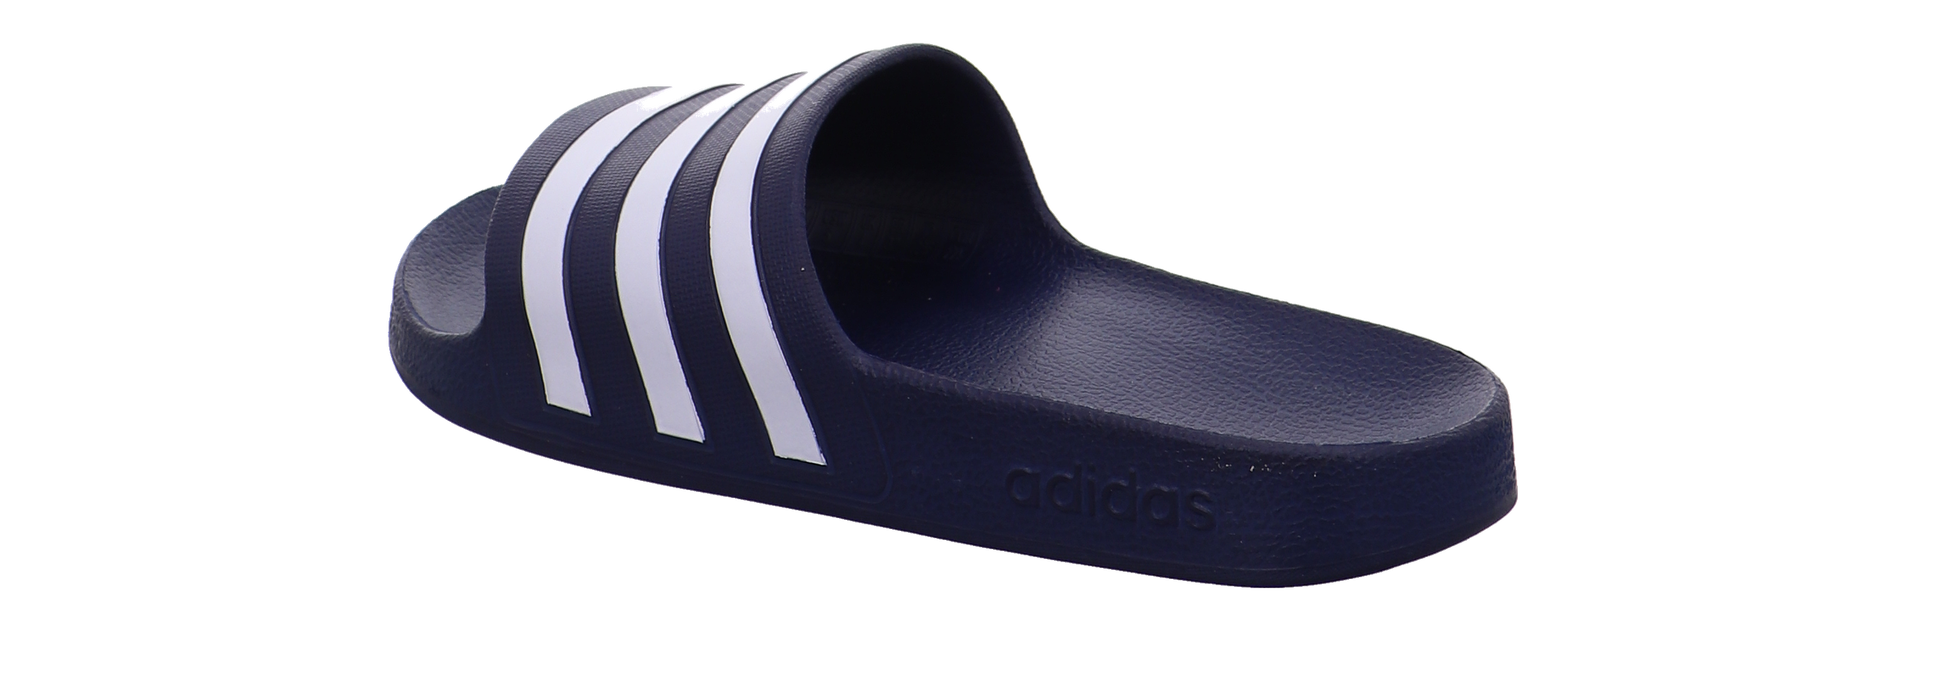 Adidas Schuhe  blau Bild3